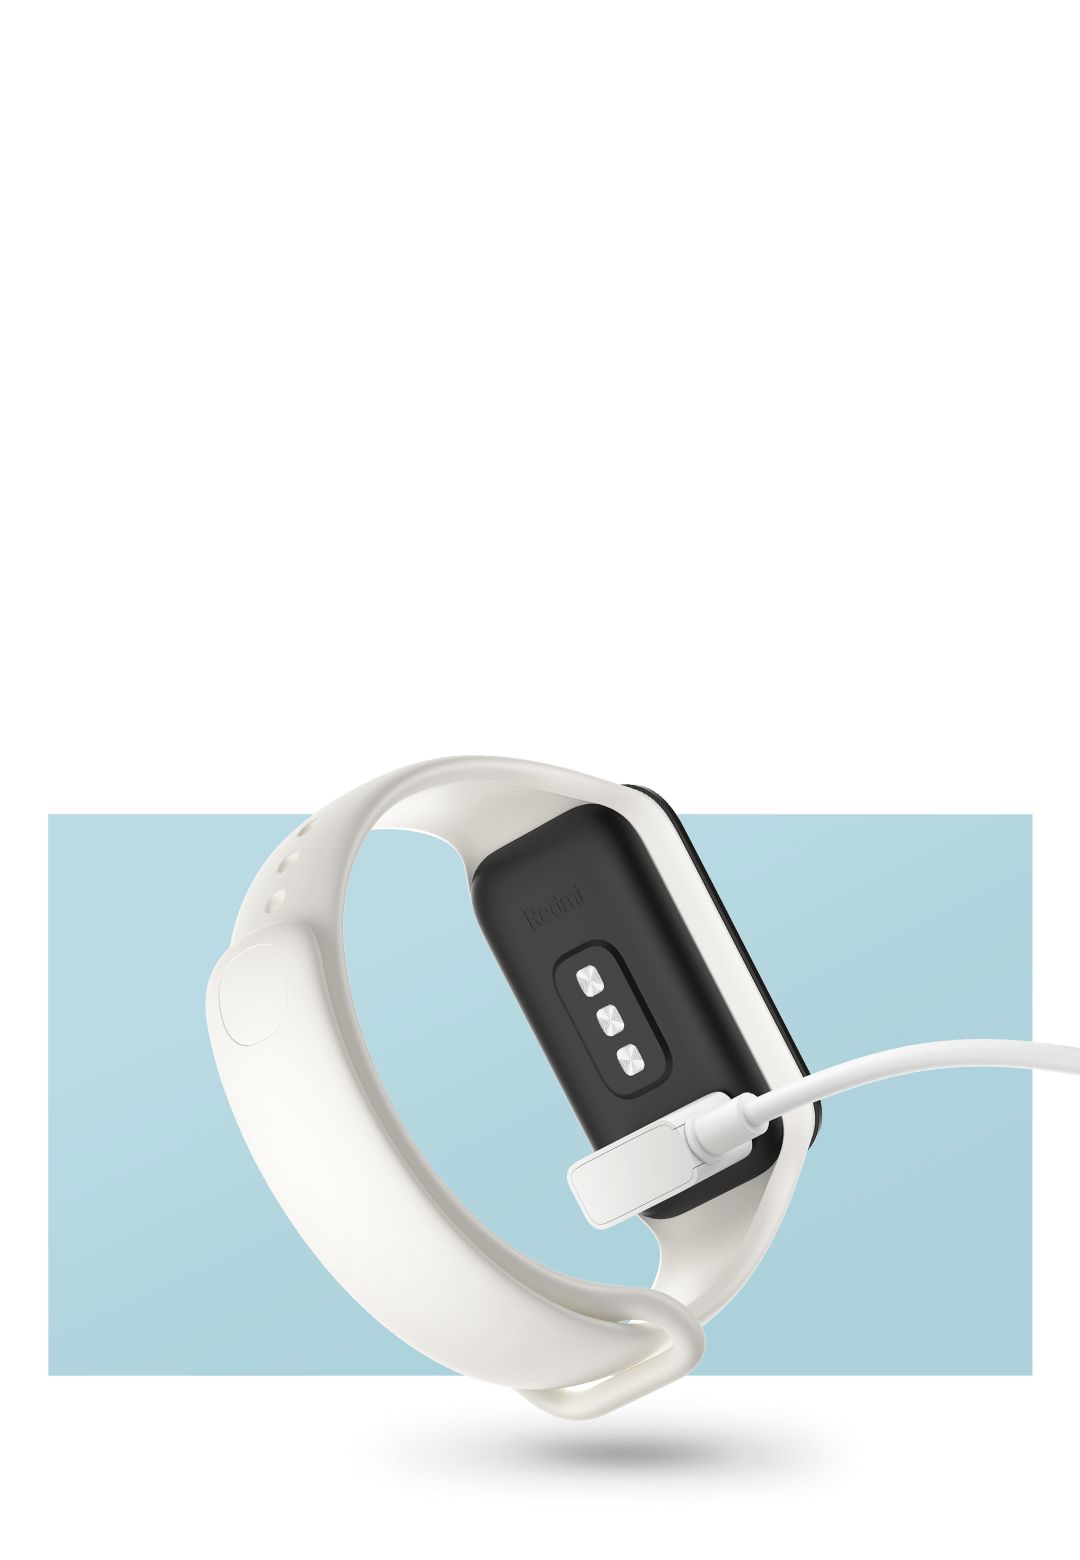 OcioDual Cable de Carga Magnética USB 2.0 para Smartwatch Xiaomi Redmi  Watch 2/Redmi Watch 2 Lite Ne